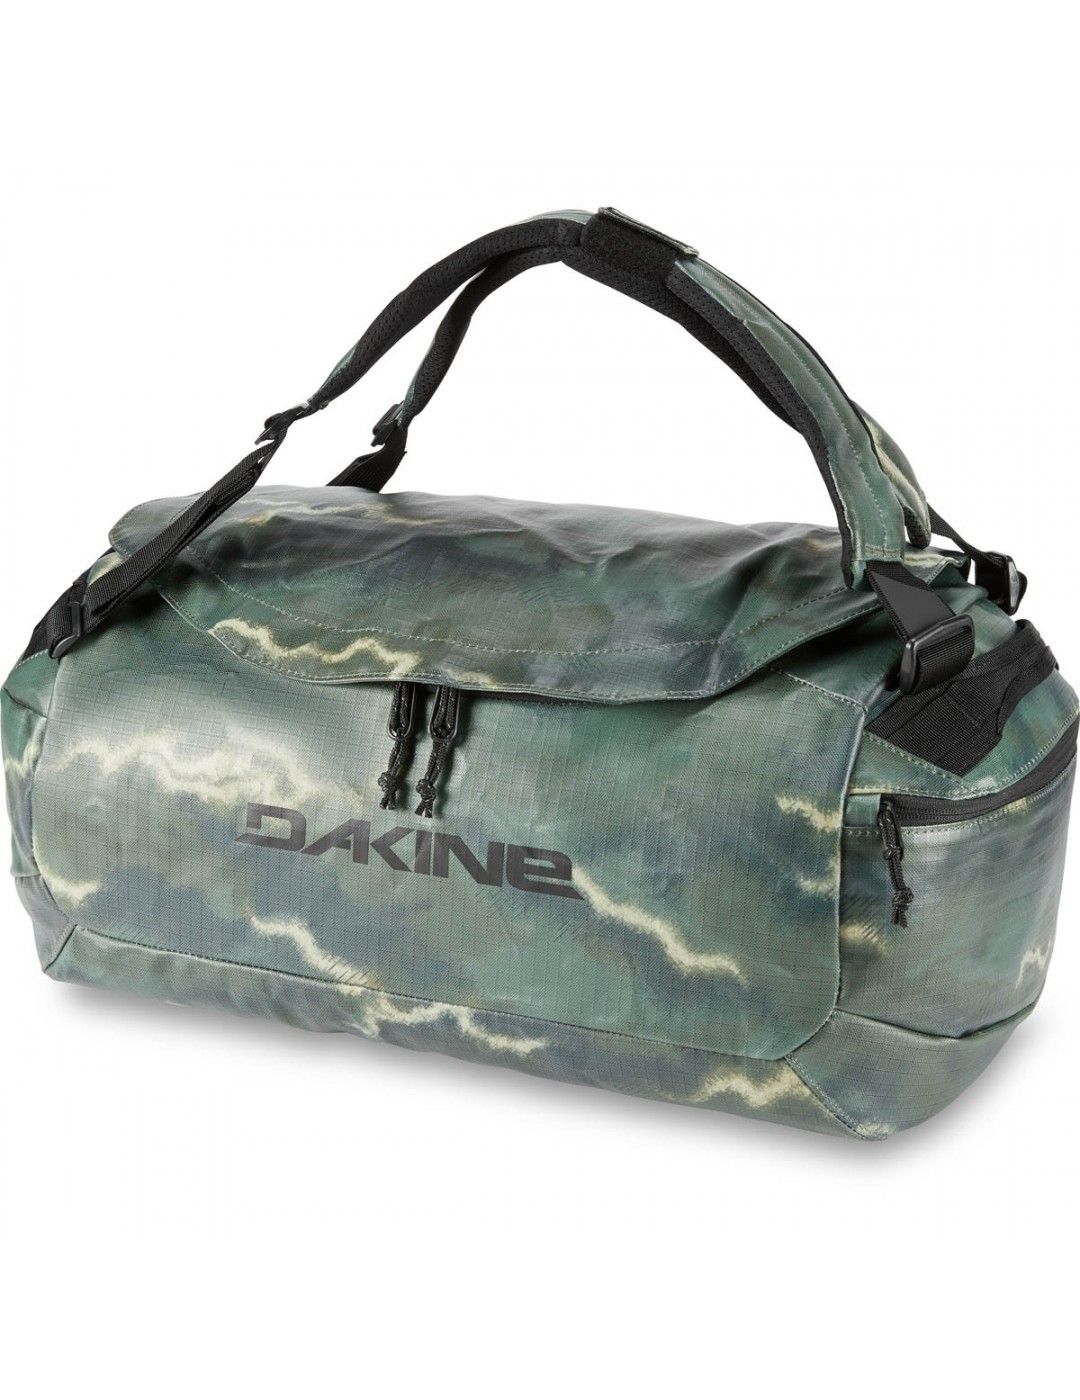 Dakine Ranger Duffle travel bag and backpack 45 liters Olive Ashcroft Camo